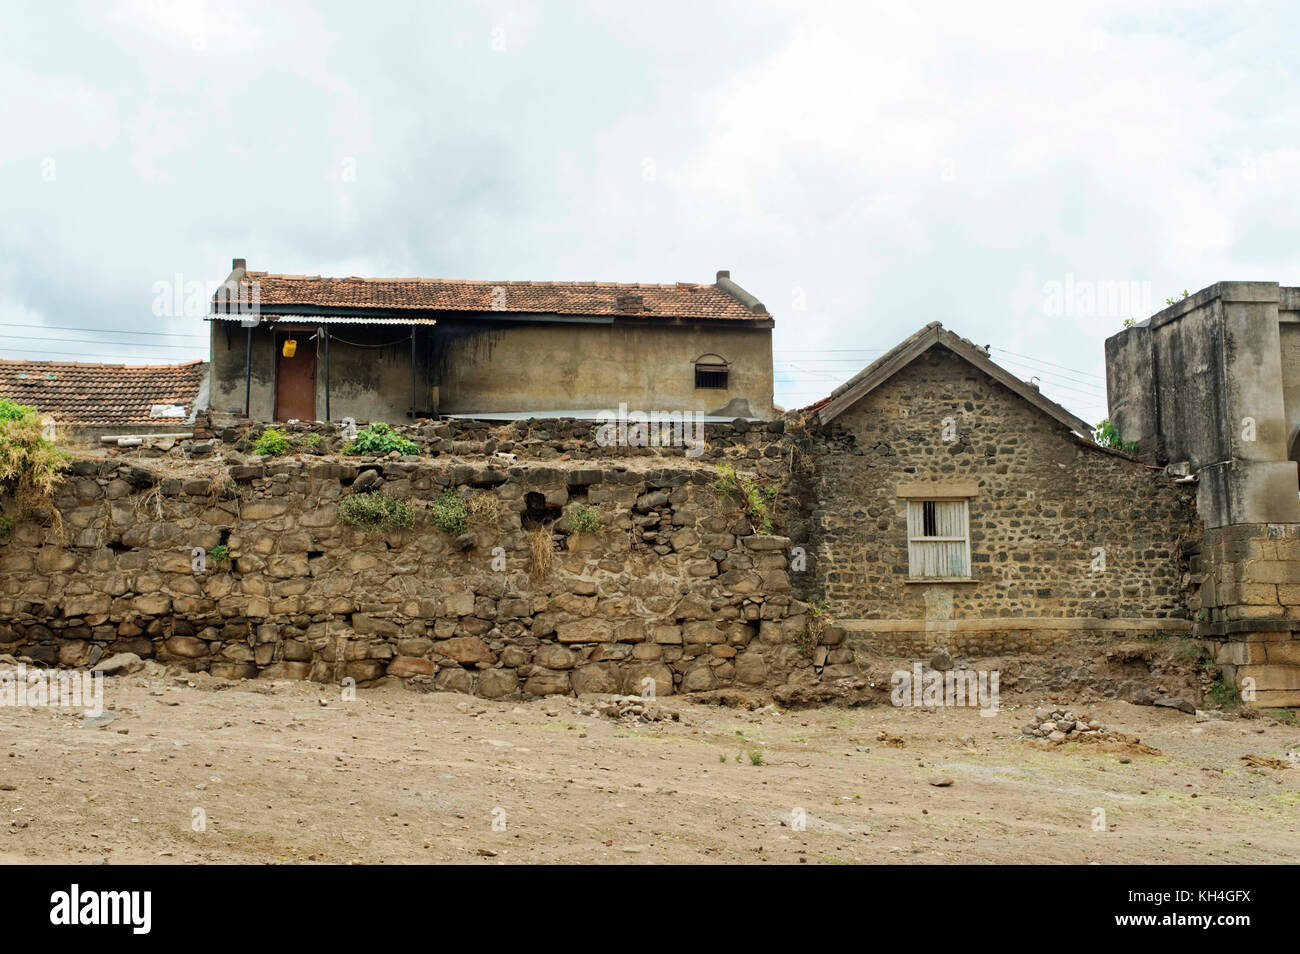 Verfallenen Haus, khidrapur, Maharashtra, Indien, Asien - stp 259605 Stockfoto